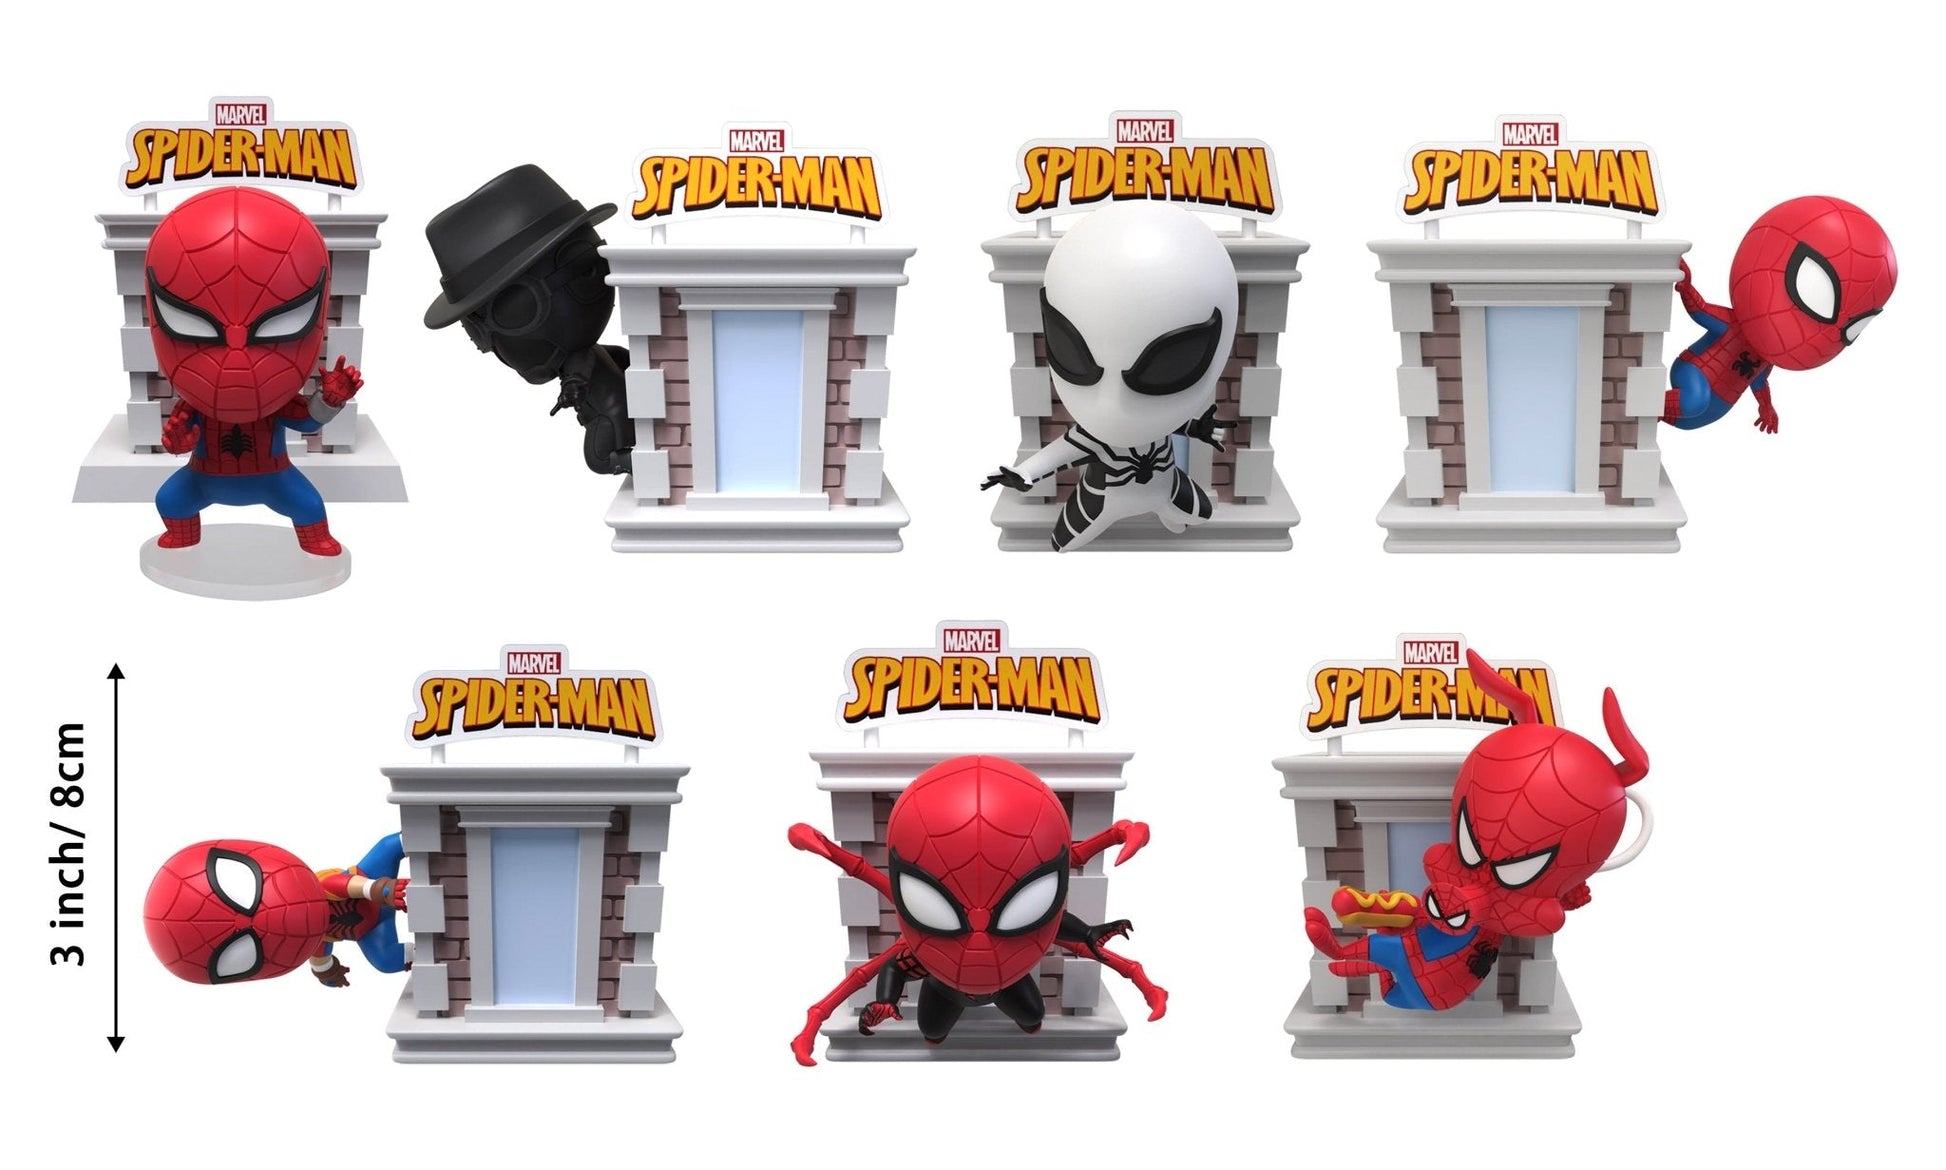 Marvel Spider-Man Tower Series Hero Box - Blind Box (6 Pack) - YuMe Toys